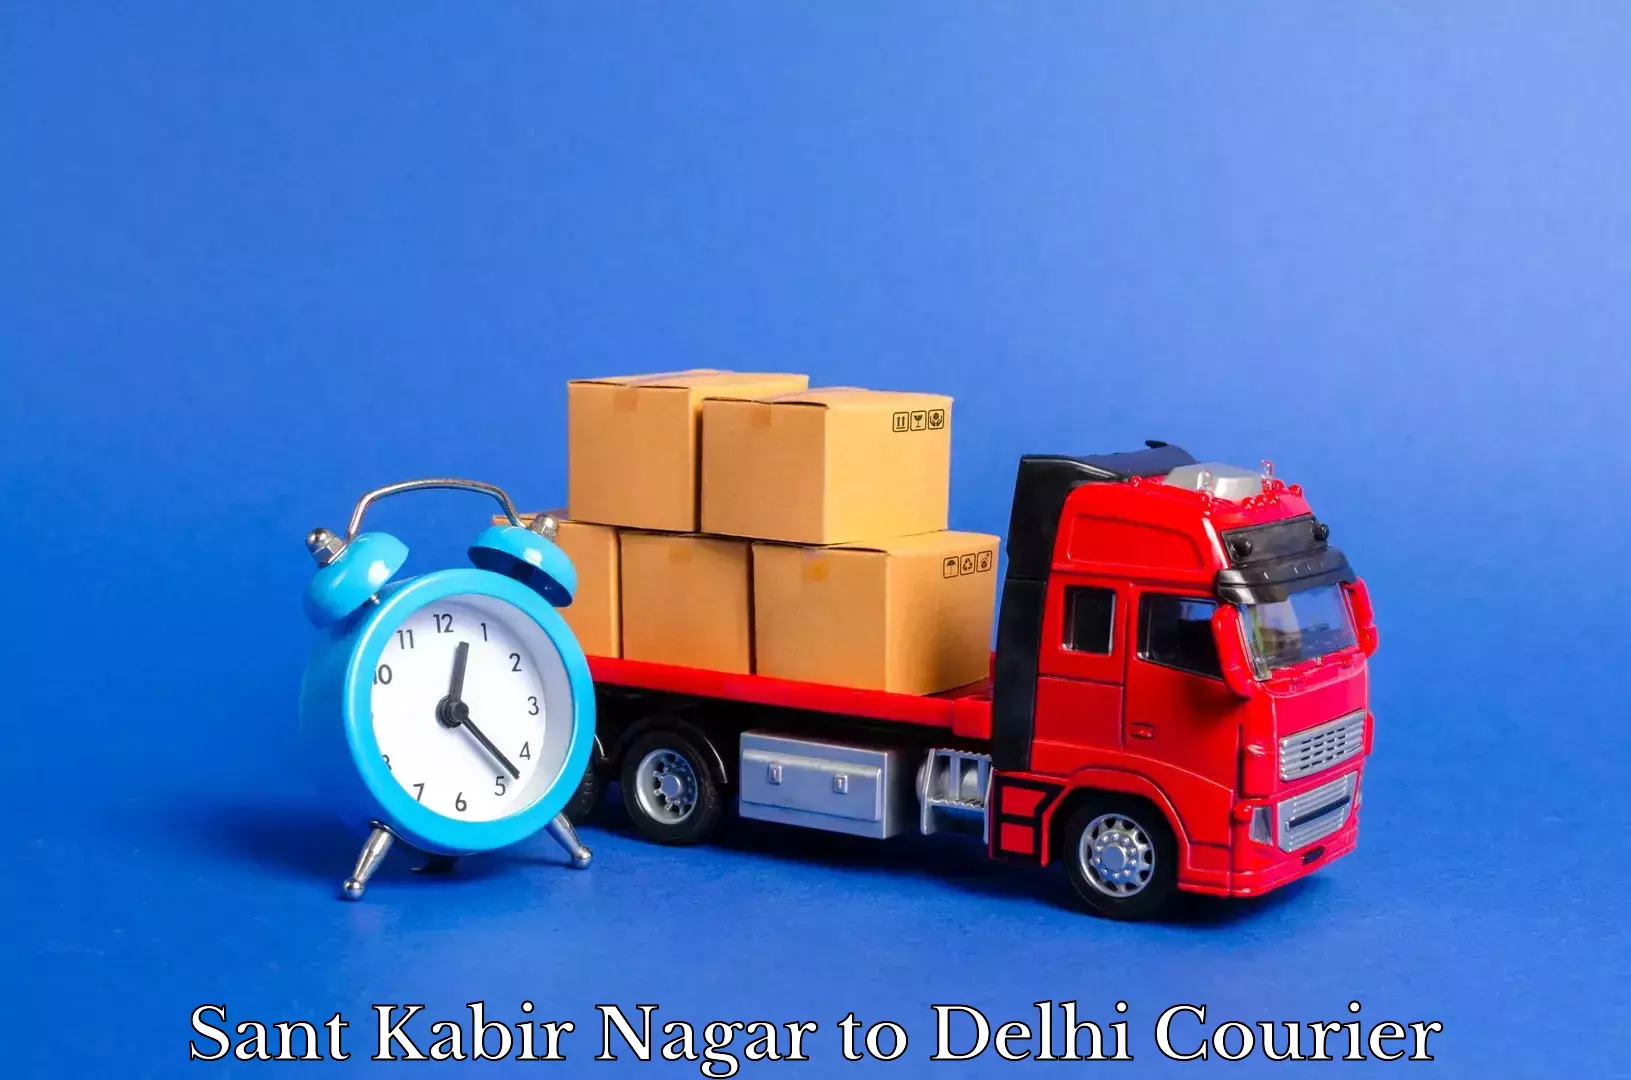 Trusted relocation experts Sant Kabir Nagar to Delhi